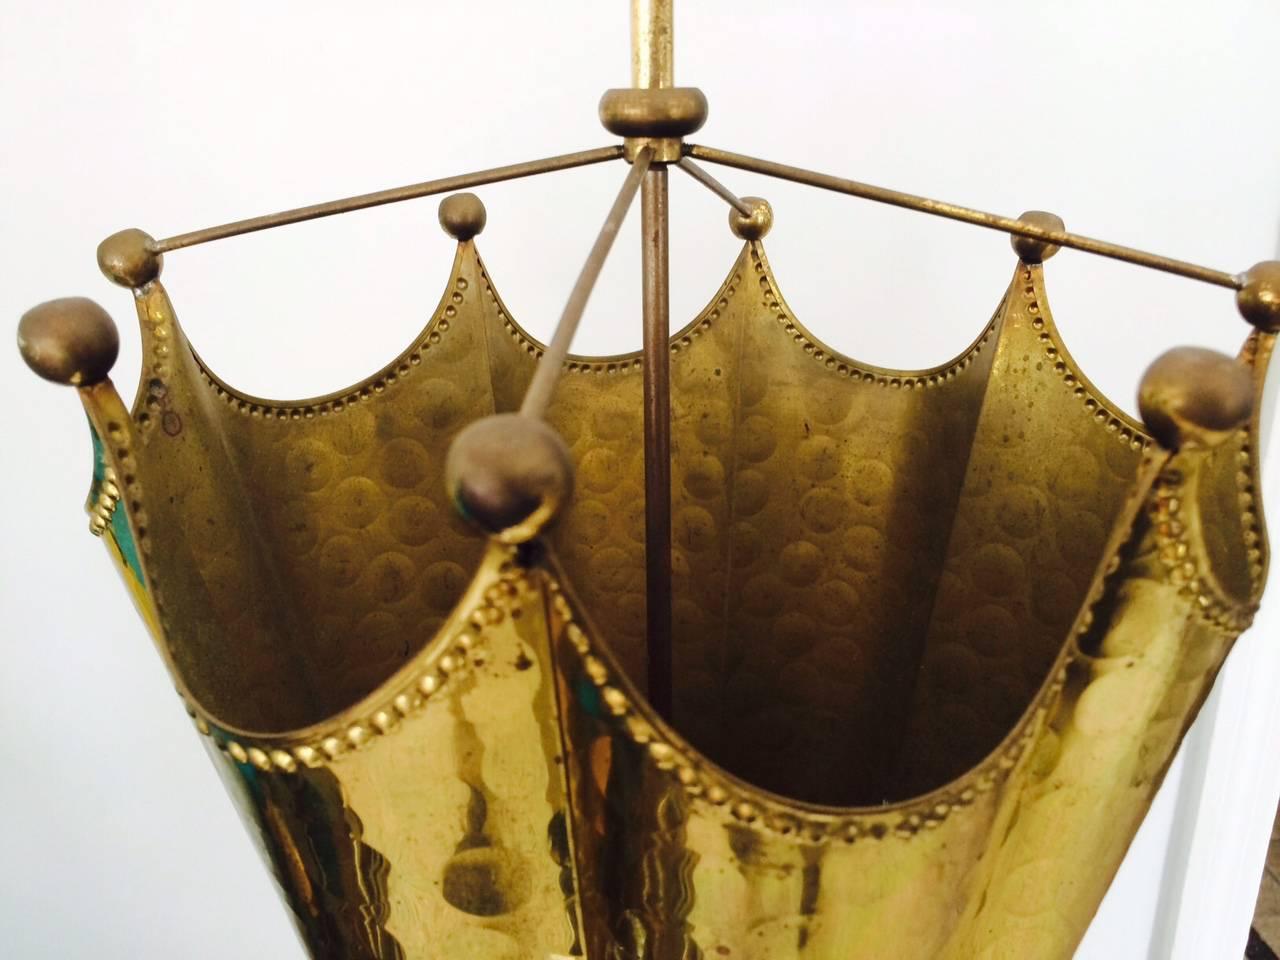 An unusual, vintage 1970s brass umbrella stand.